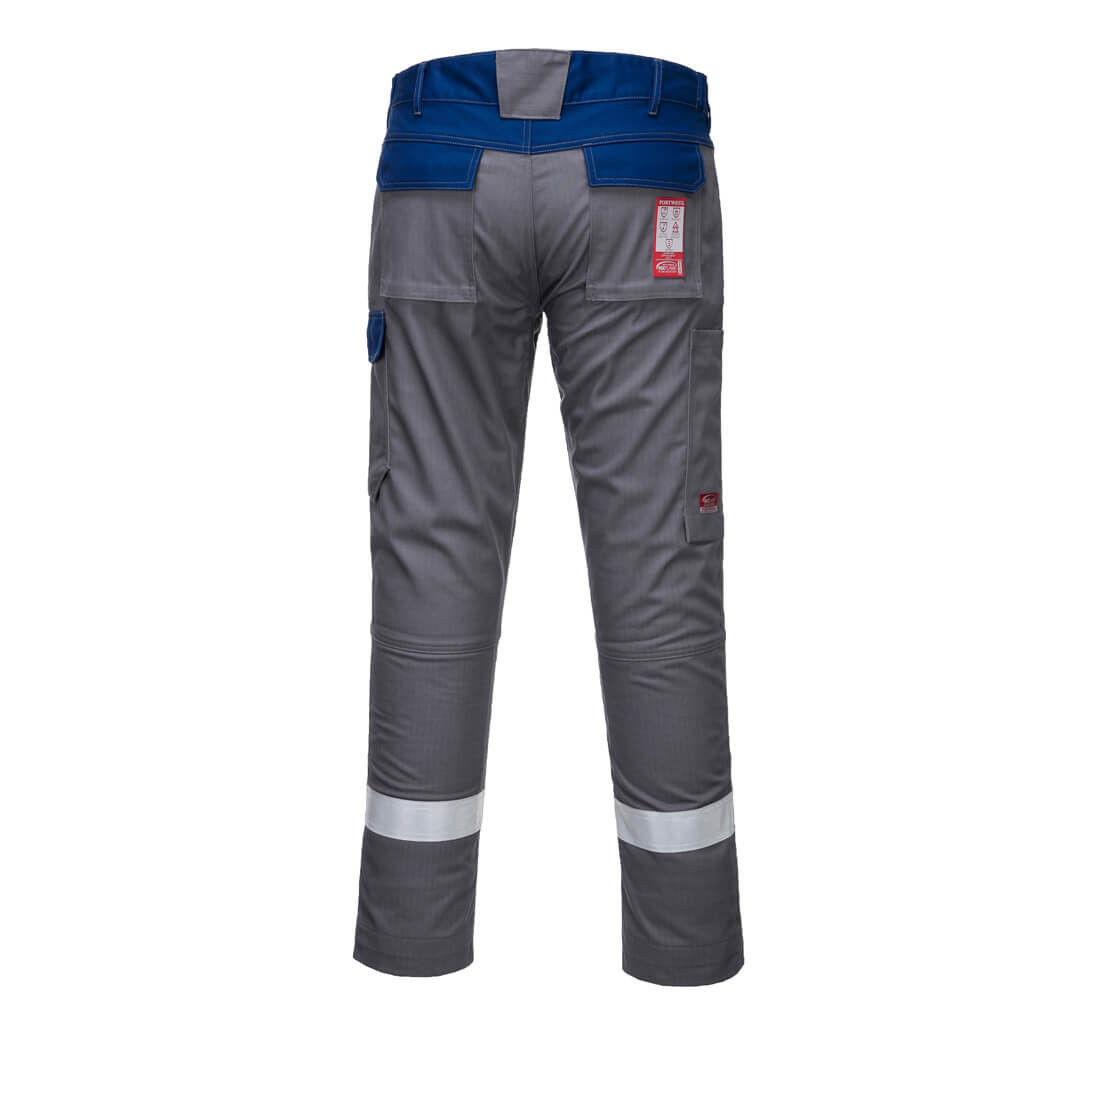 Pantaloni Bizflame Ultra in 2 nuante - Imbracaminte de protectie